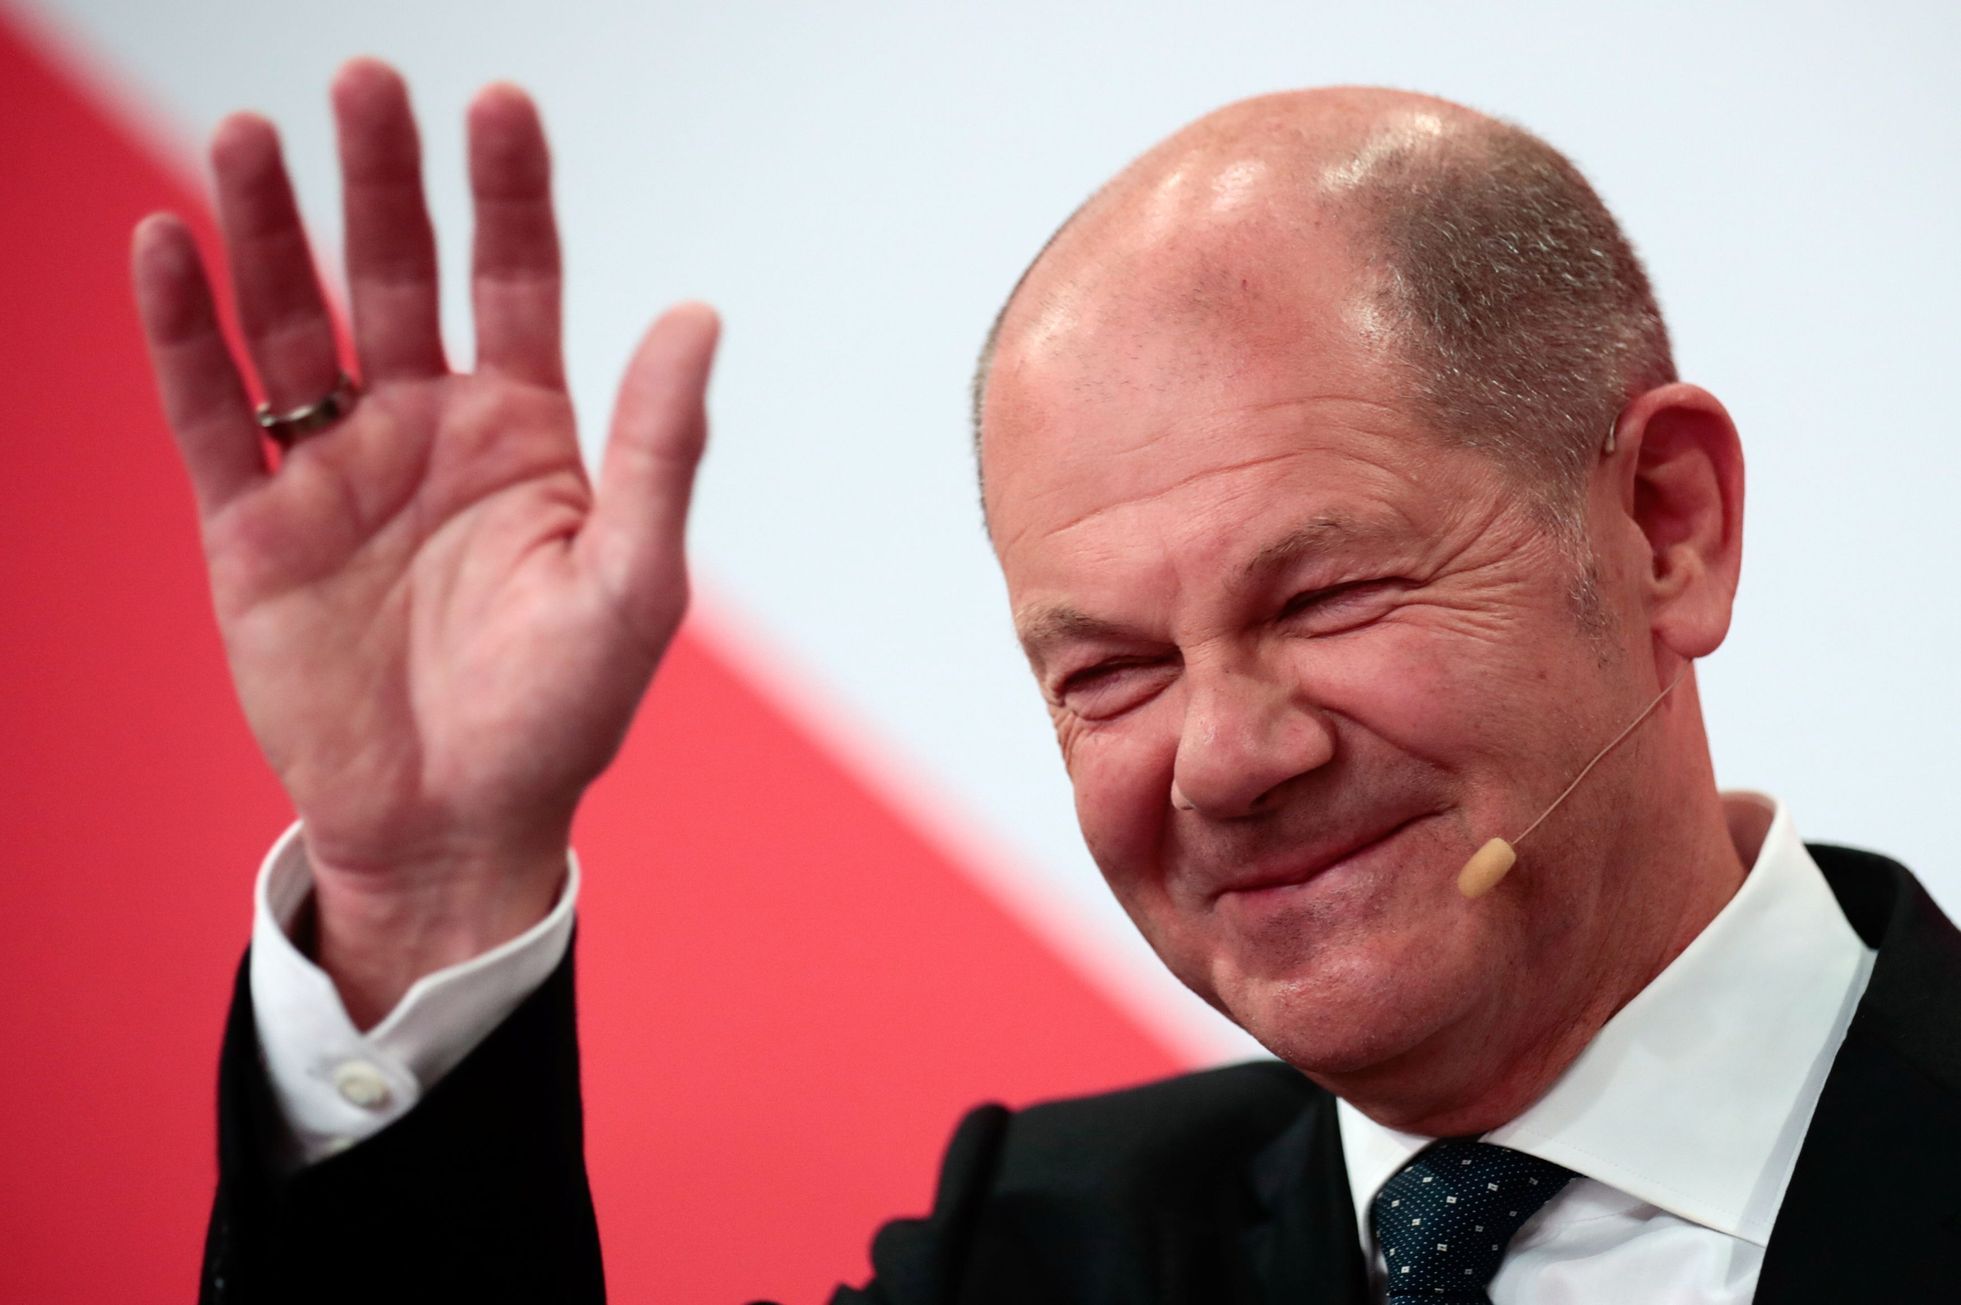 Sozialdemokrat Scholz wünscht Bundeskanzlerin beste Wünsche, sagt der bayerische Ministerpräsident